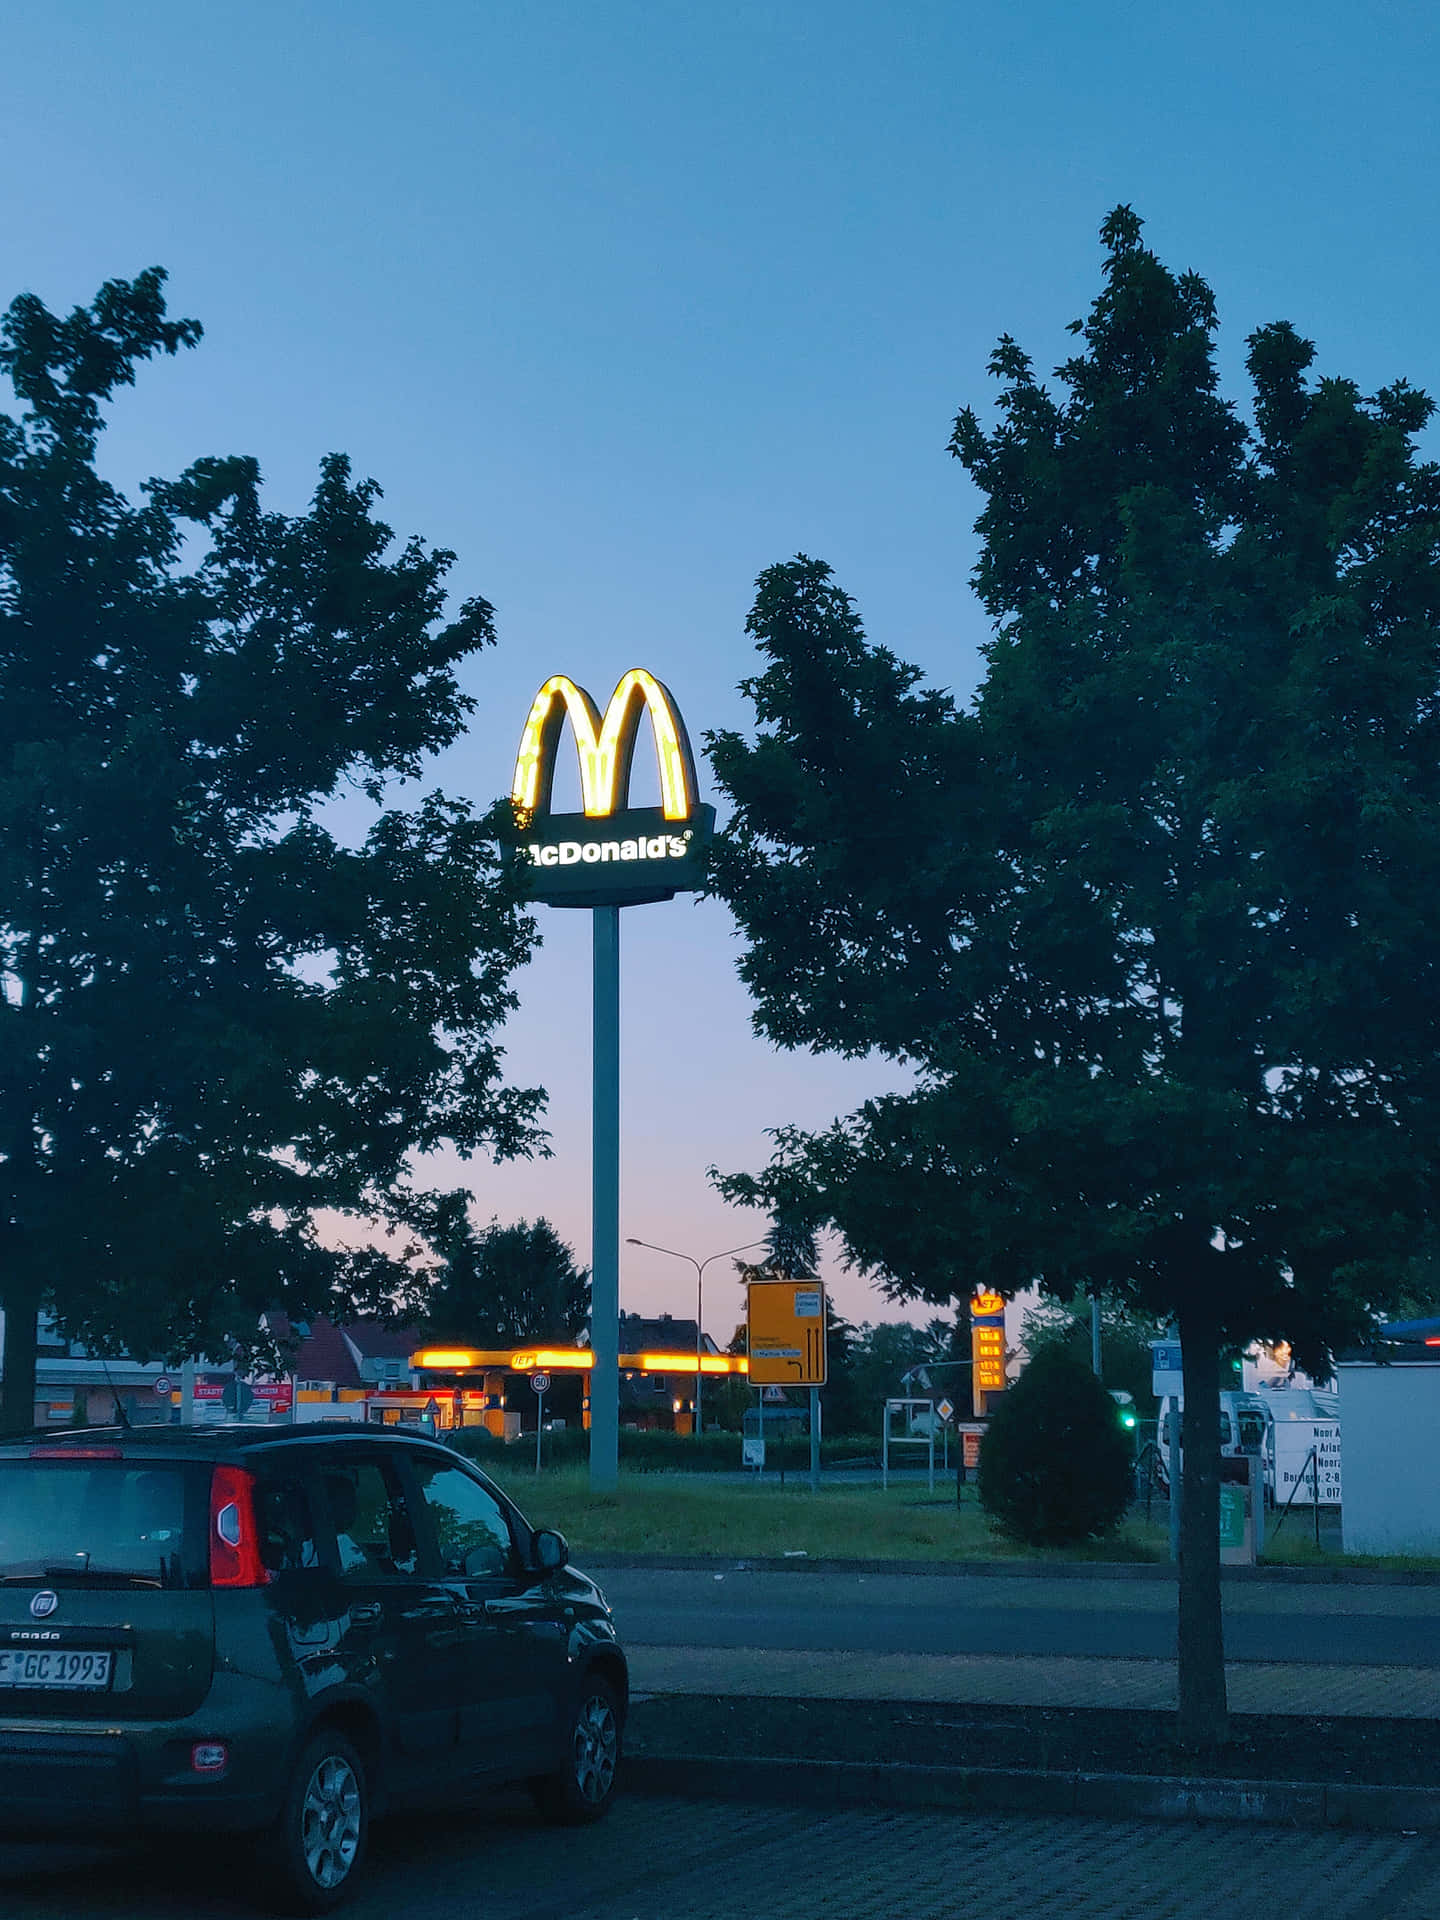 McDonald’s: A Home of Delicious, Artful Delights. Wallpaper